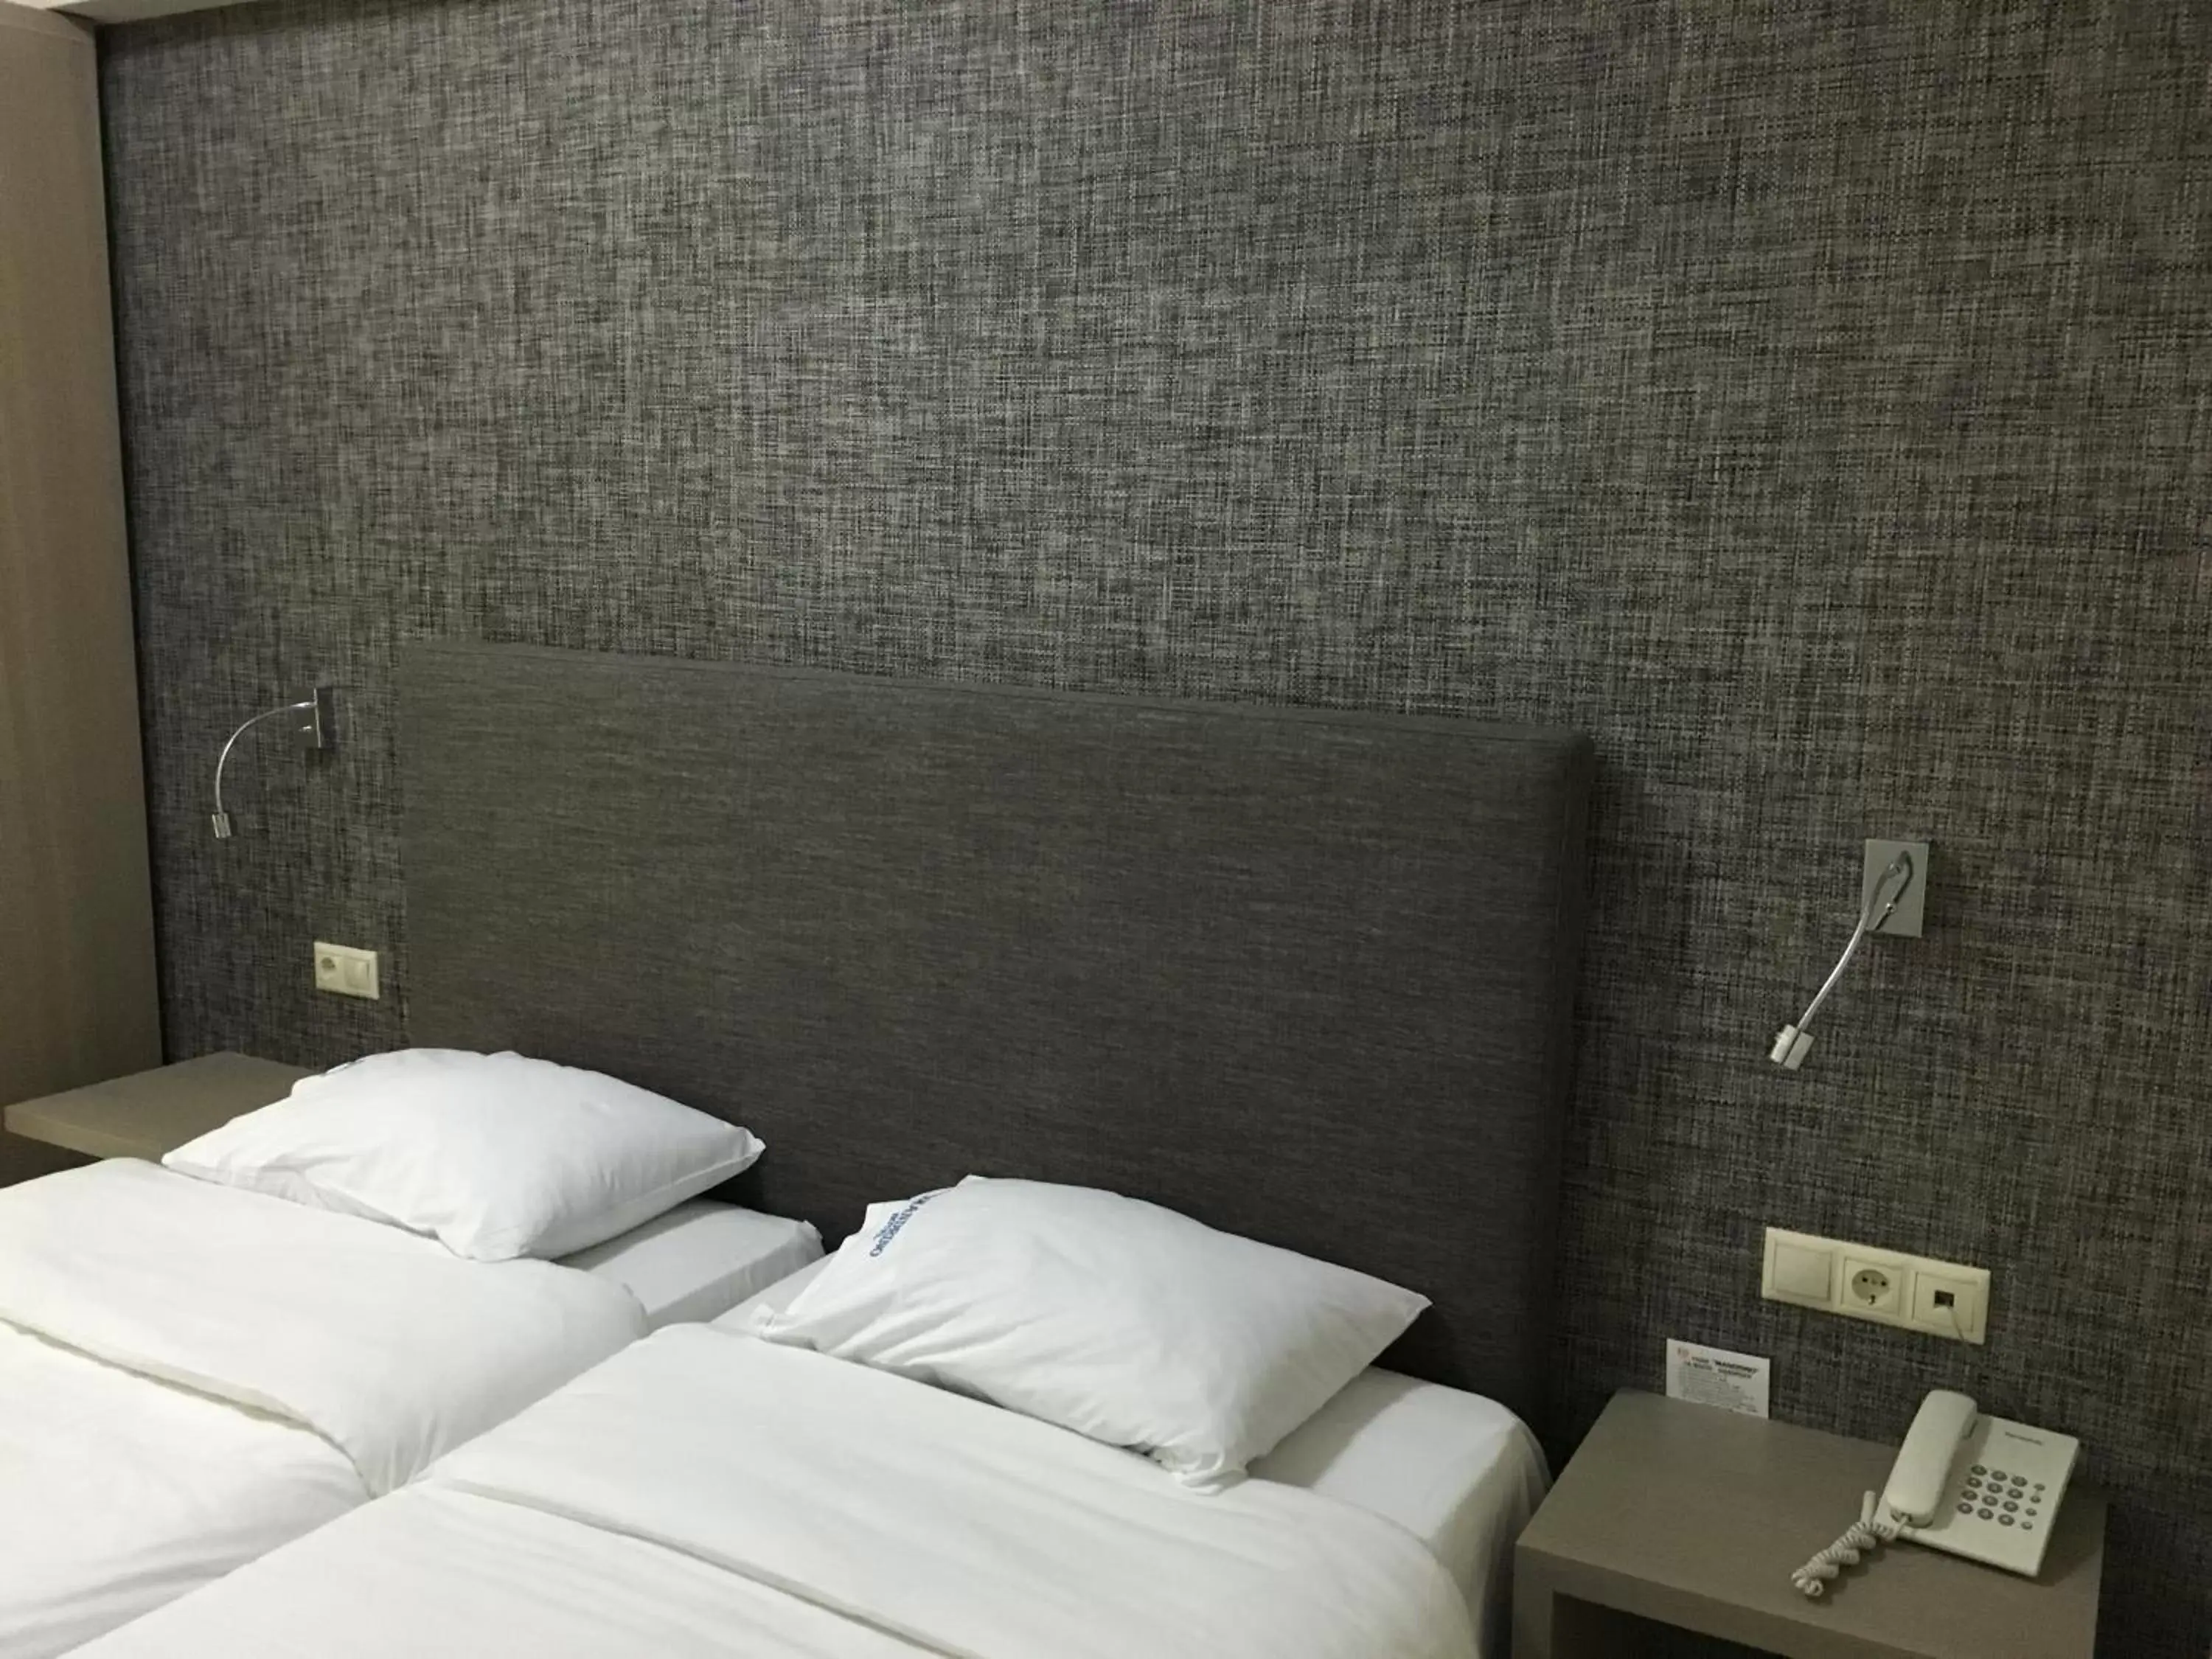 TV and multimedia, Bed in Mandrino Hotel